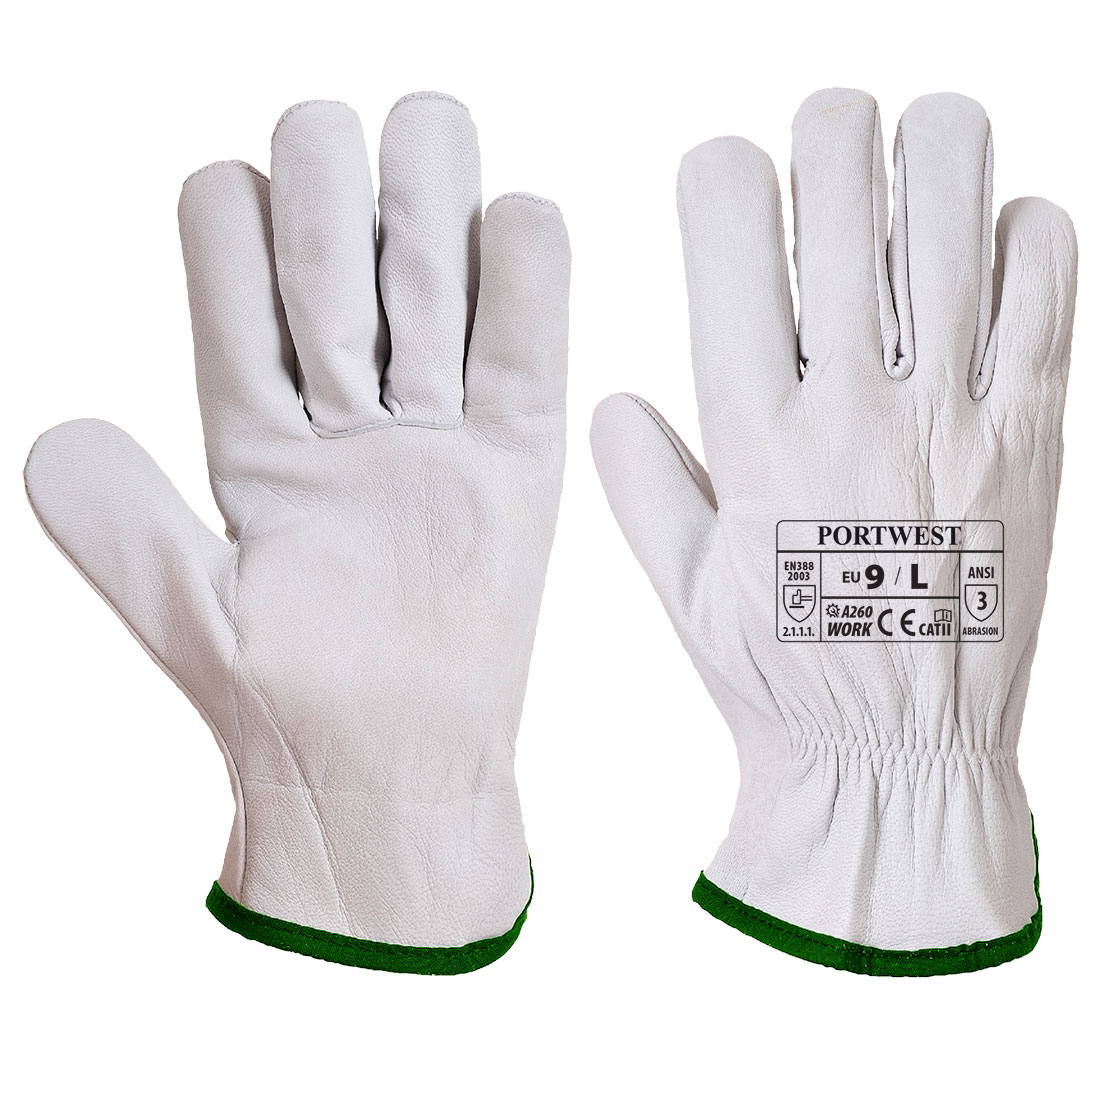 Leather Riggers Gloves Premium Goat Skin General Purpose Work Driver Glove